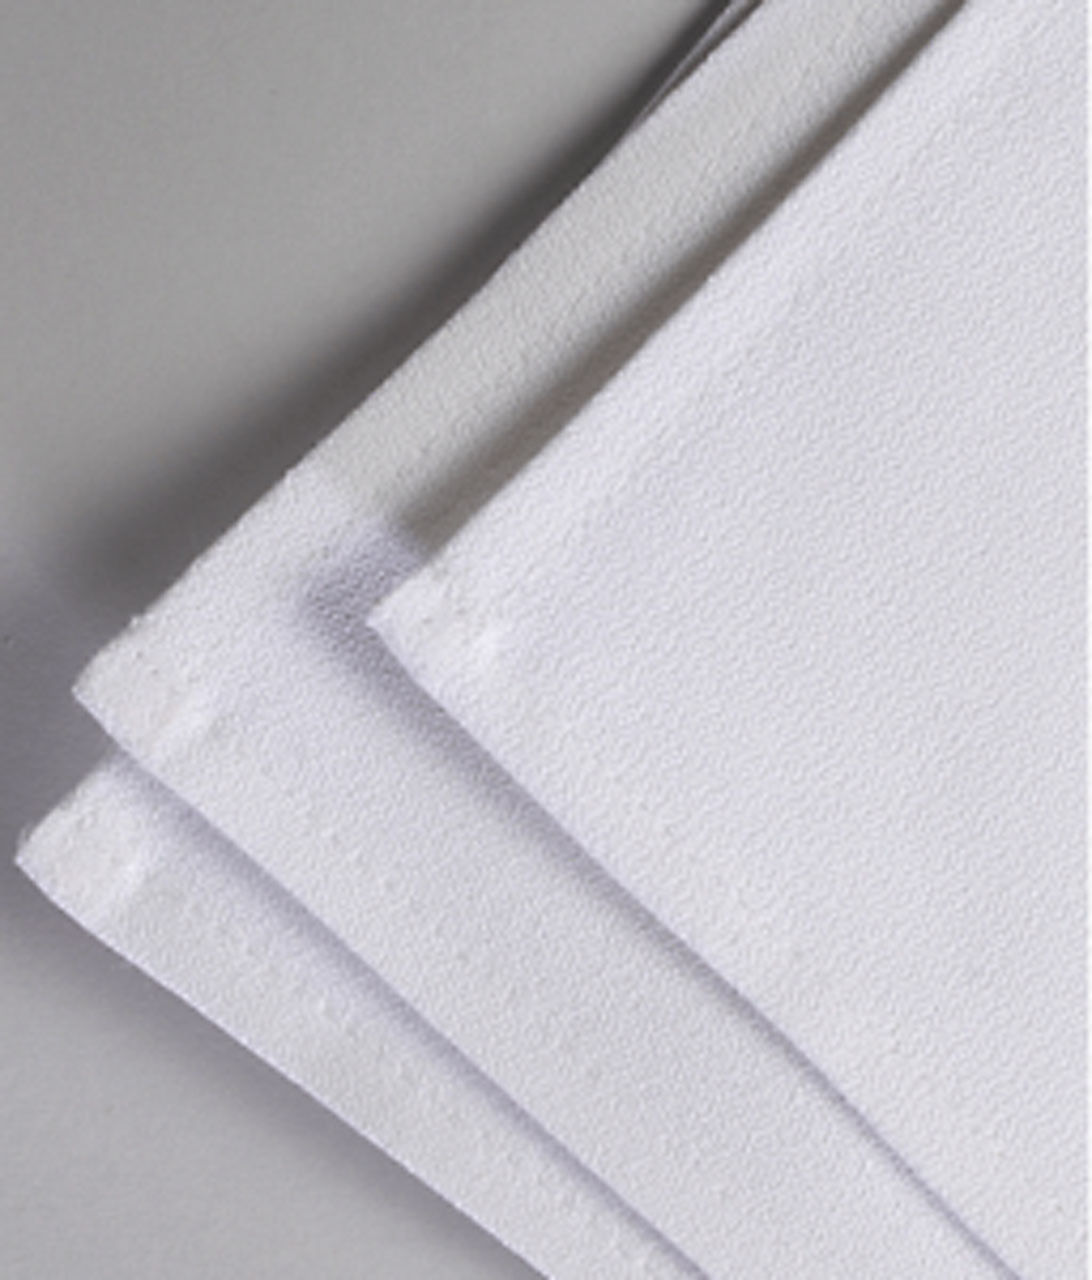 Are the 100% cotton napkins bulk durable?